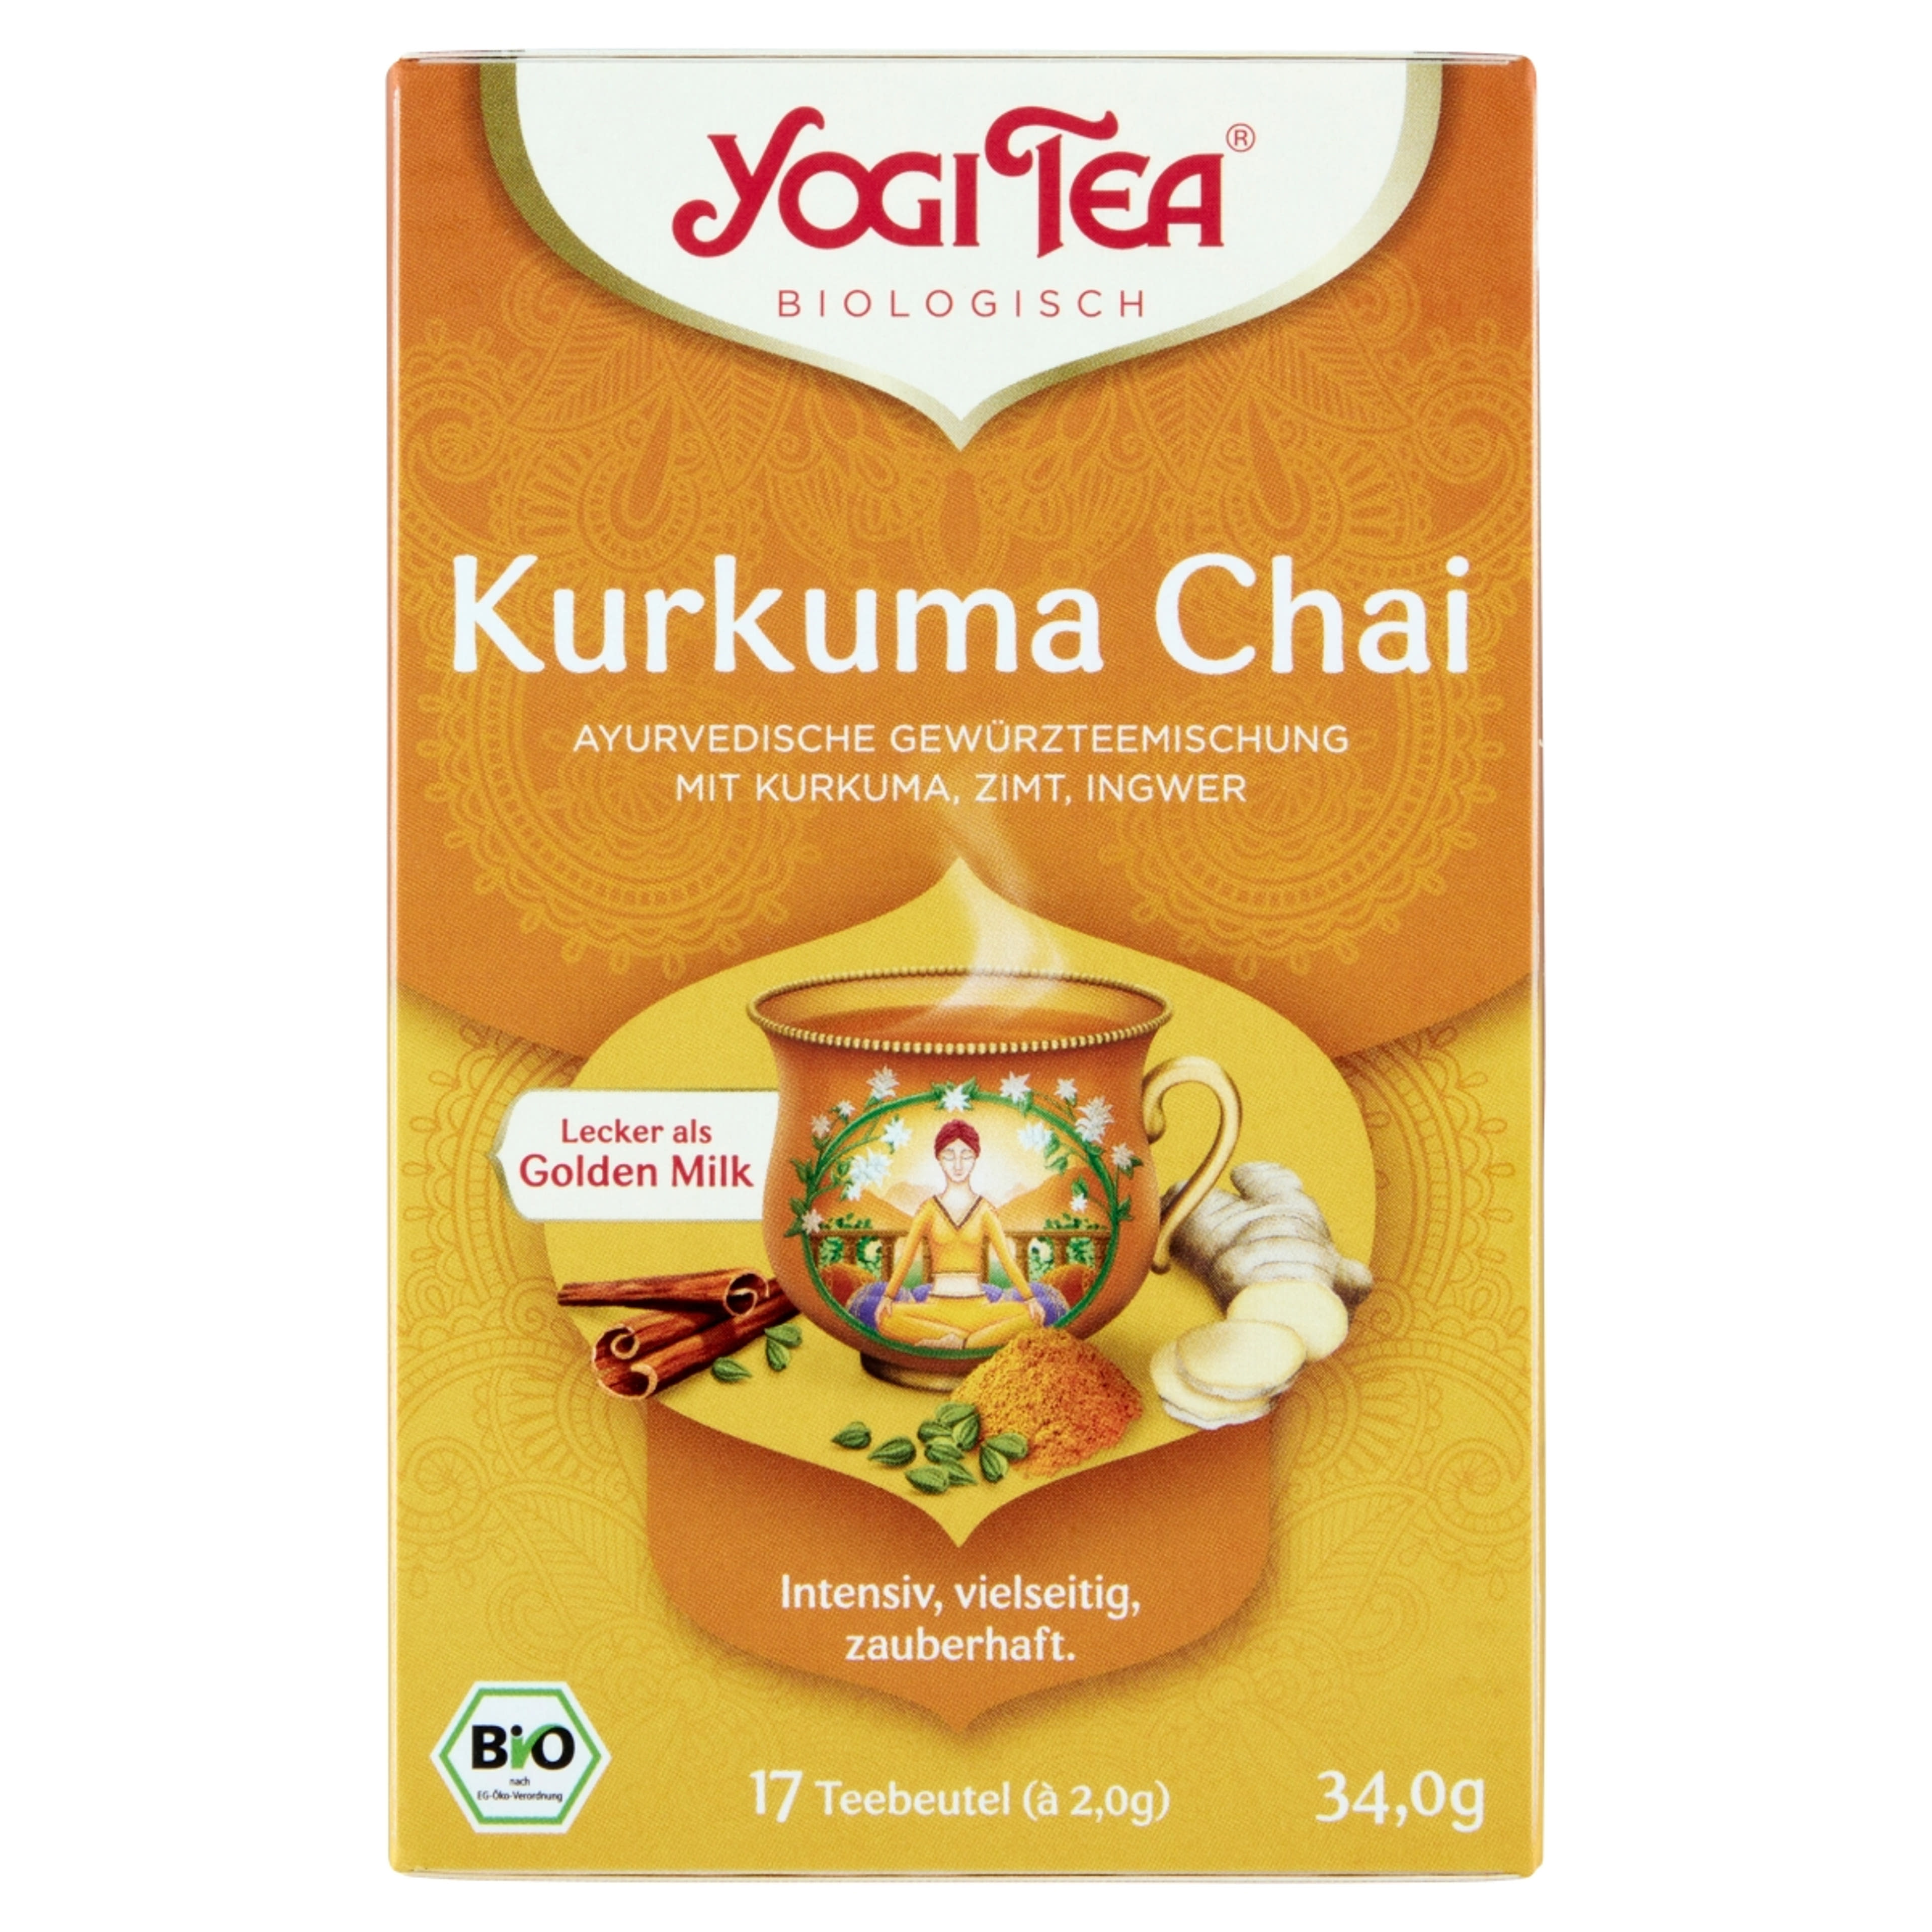 Yogi tea kurkuma chai bio tea - 34 g-1